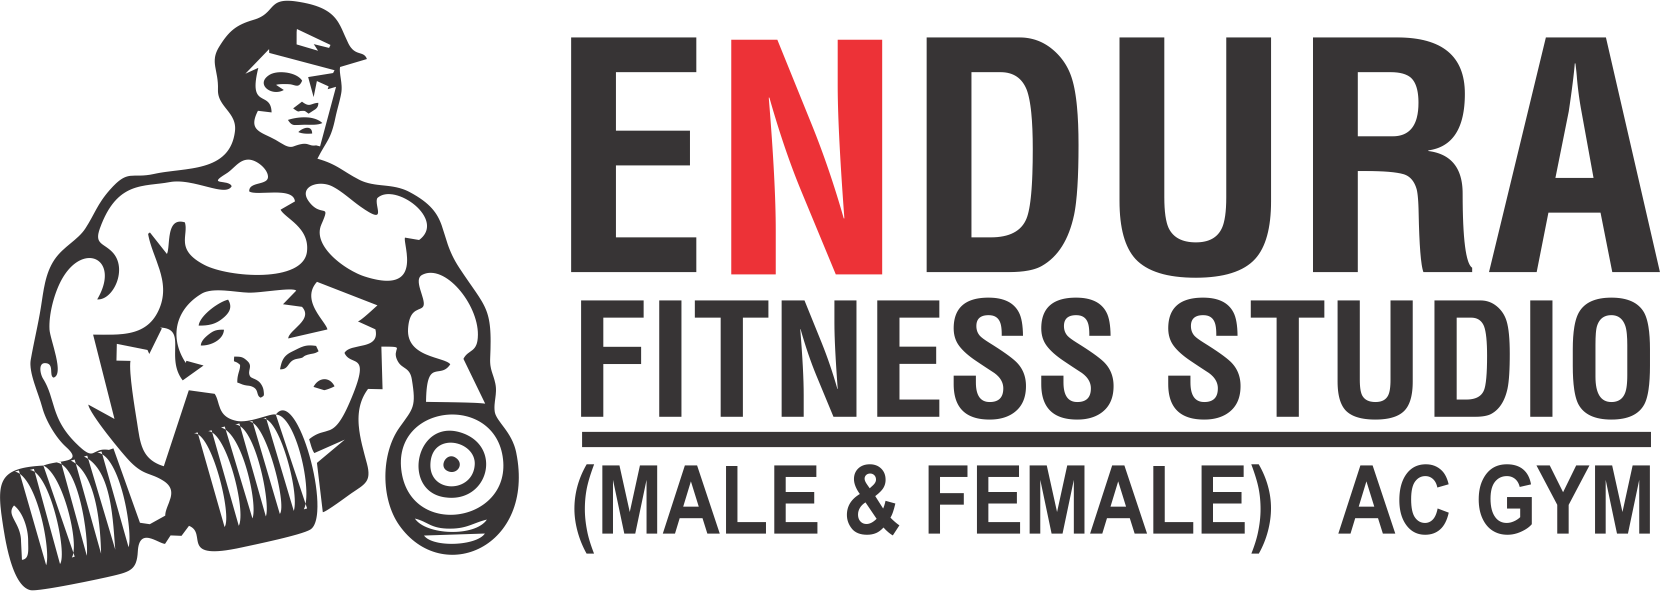 Endura Fitness Studio|Gym and Fitness Centre|Active Life